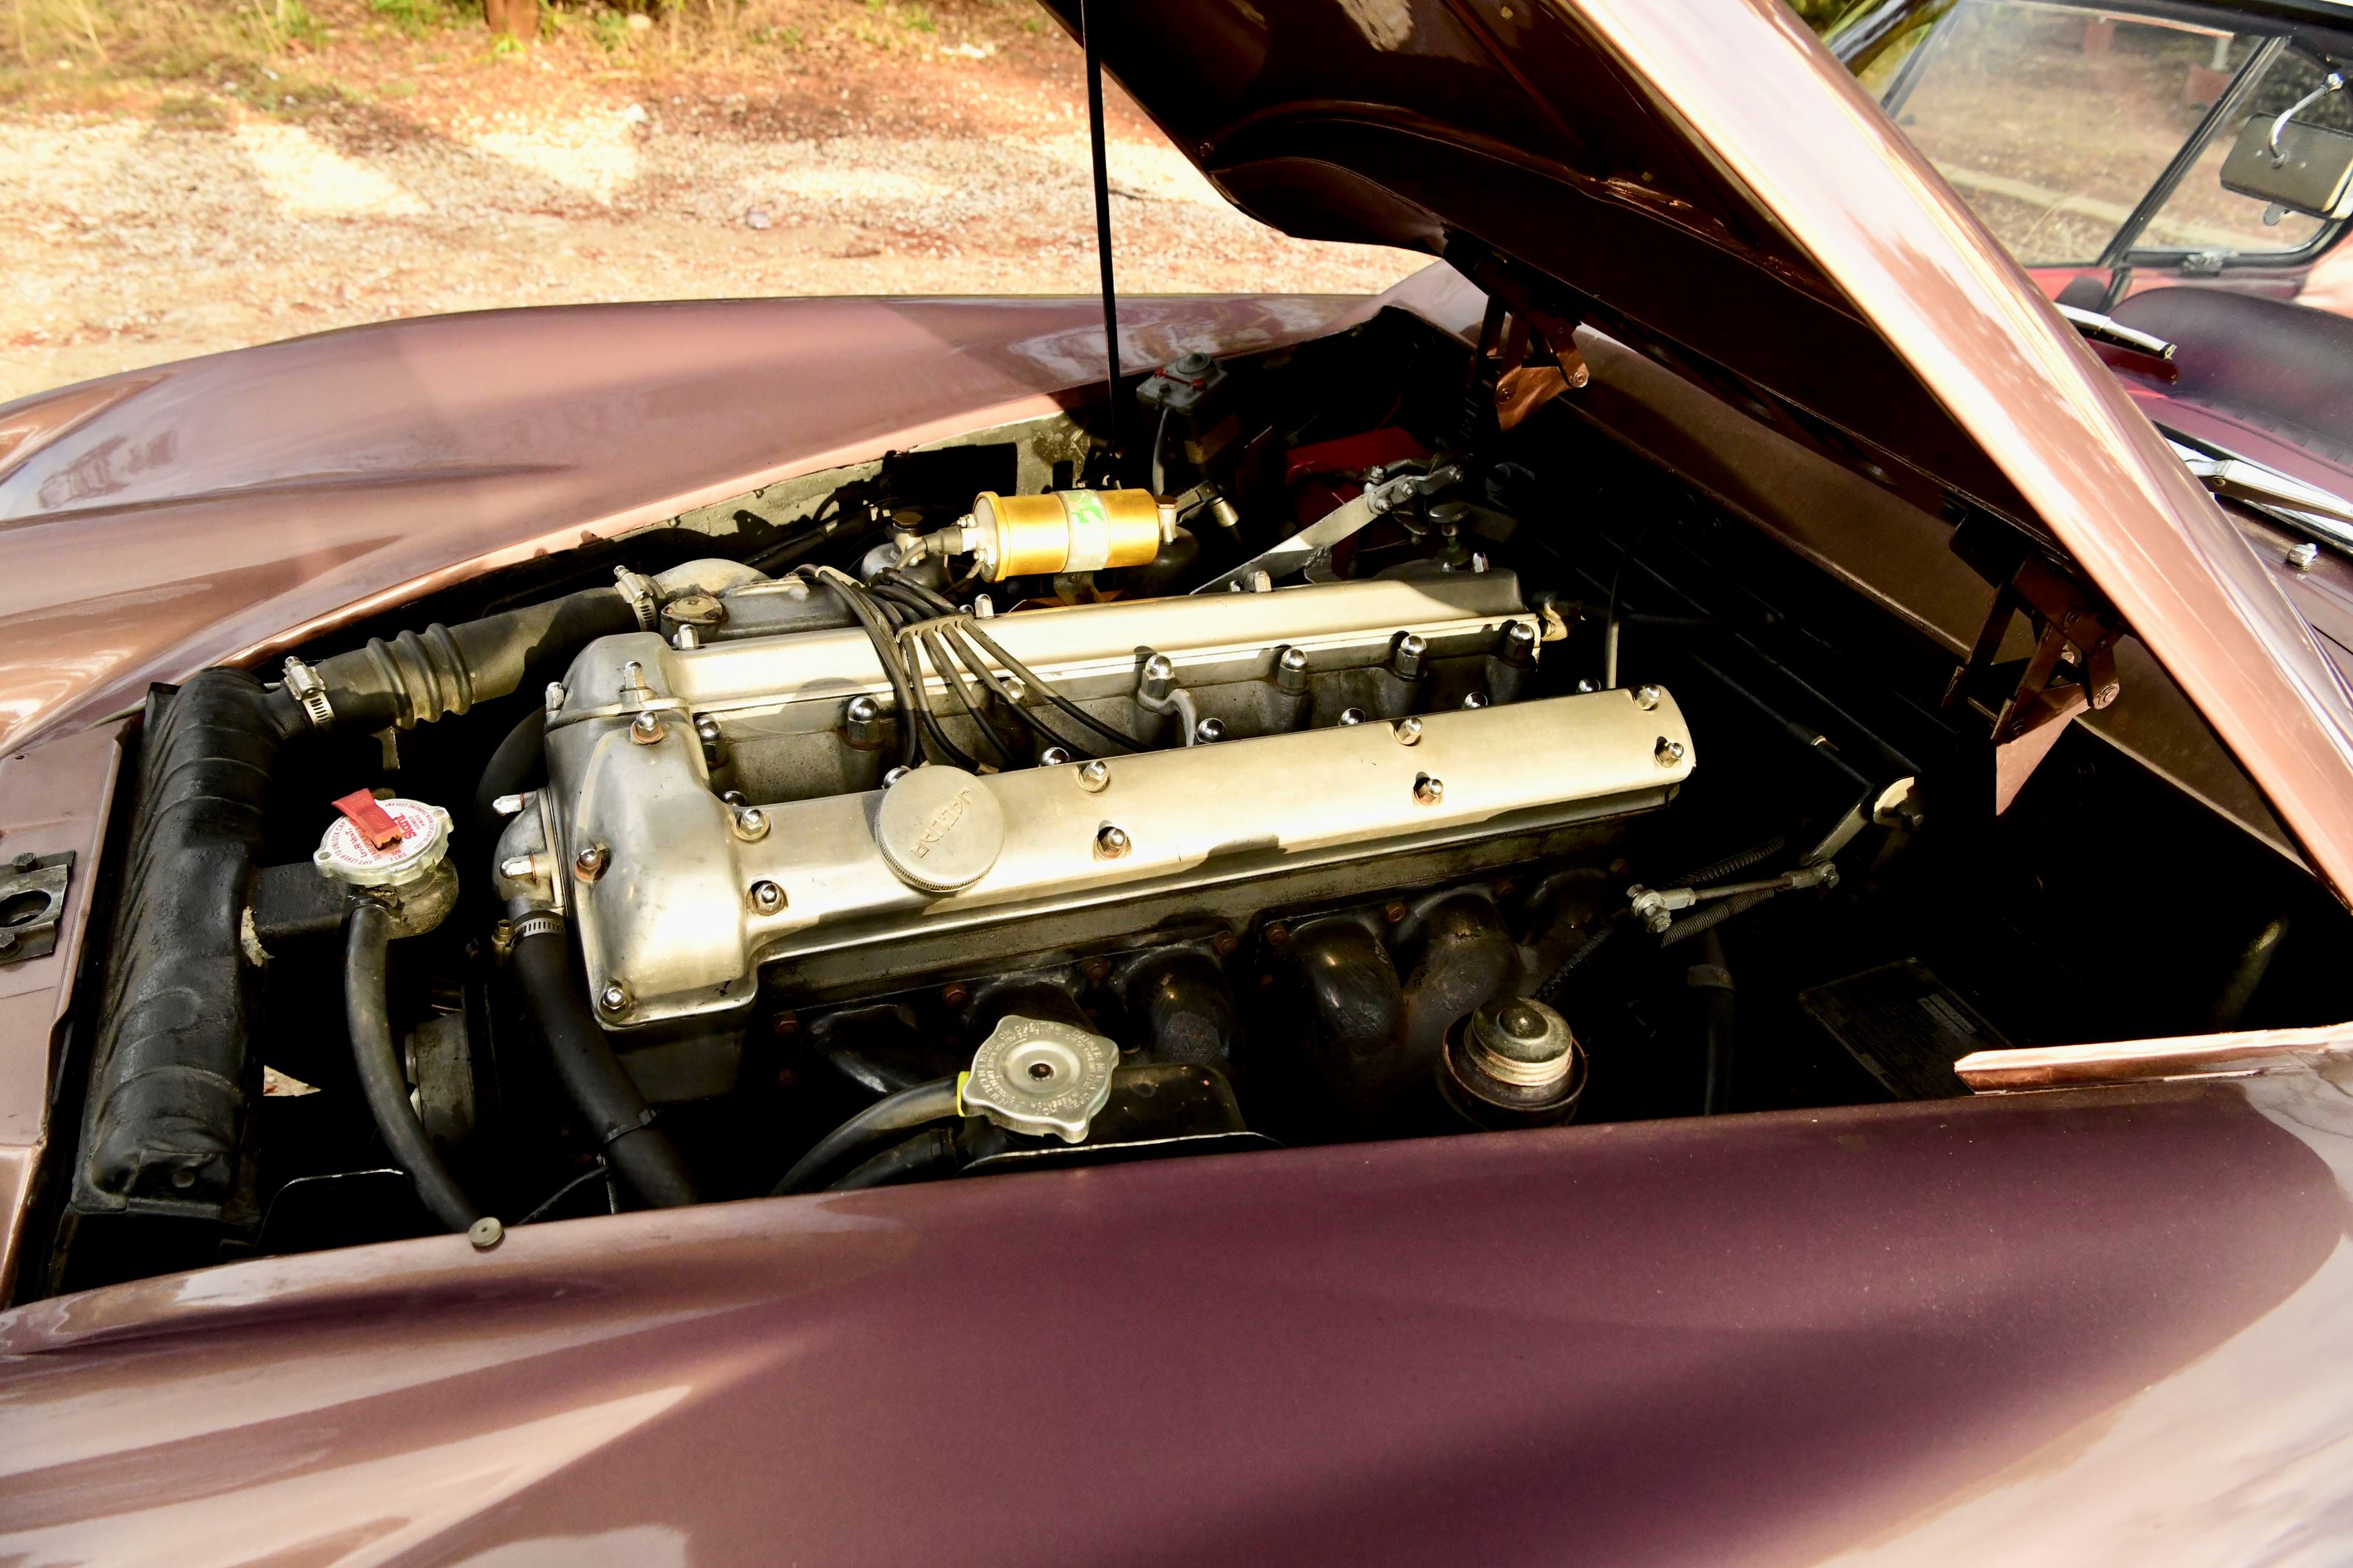 Jaguar xk150 3.4 litre fhc lhd auto  uu1uqnedkzex0v6pfyp2r